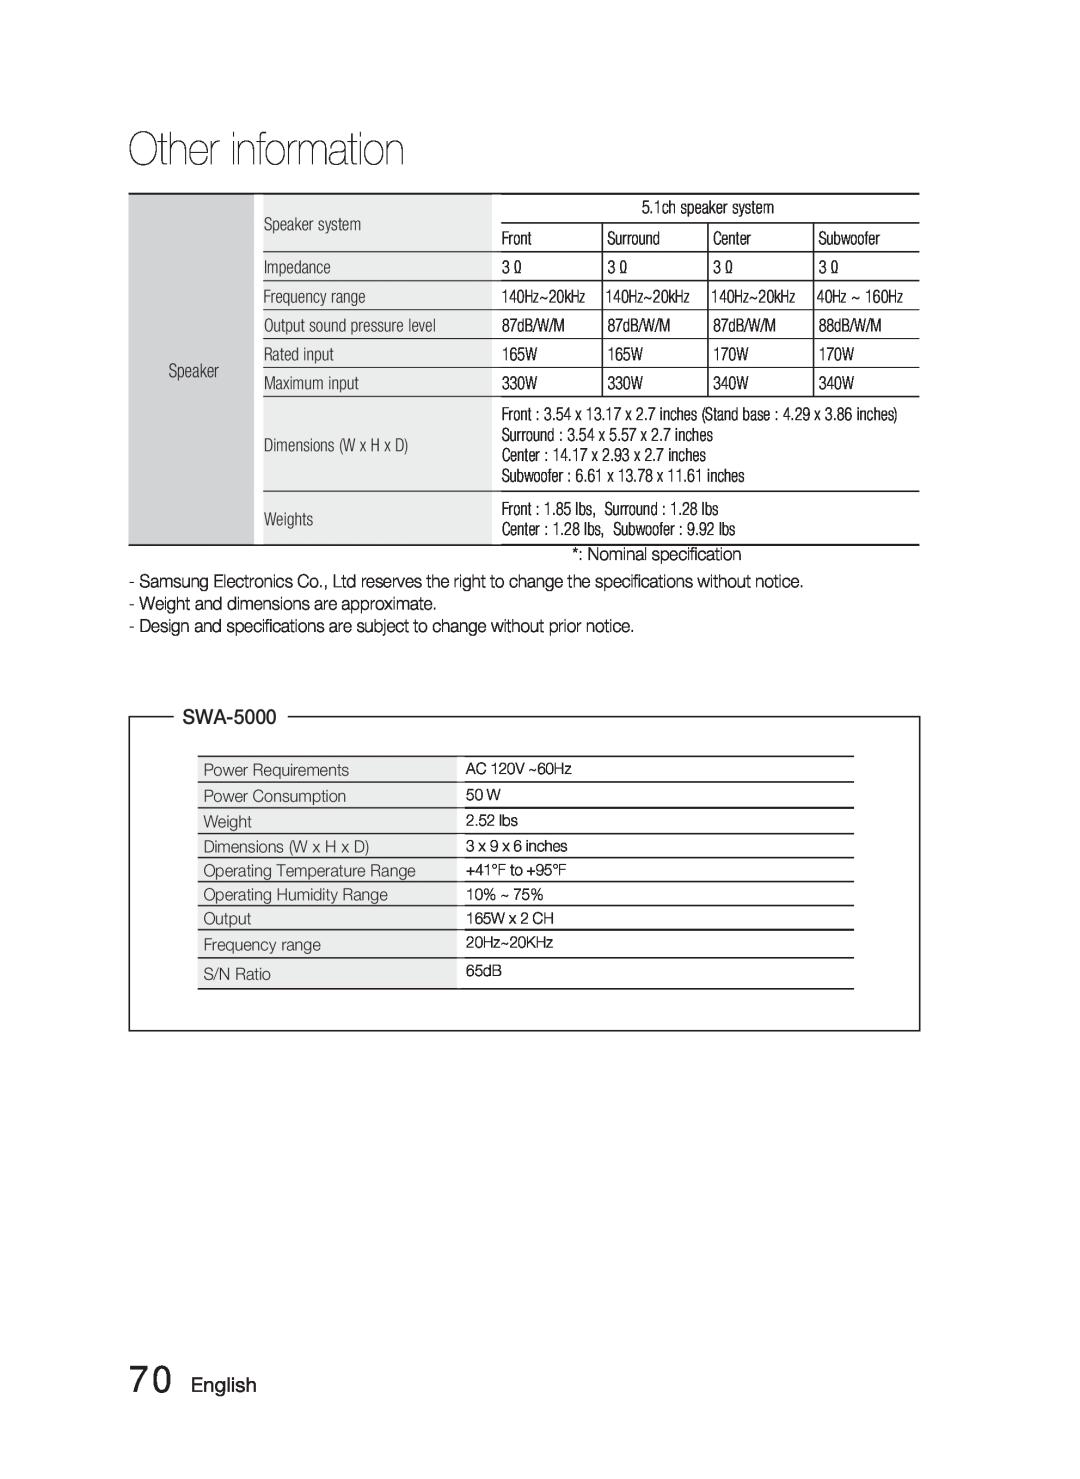 Samsung AH68-02279R user manual SWA-5000, English, Other information 